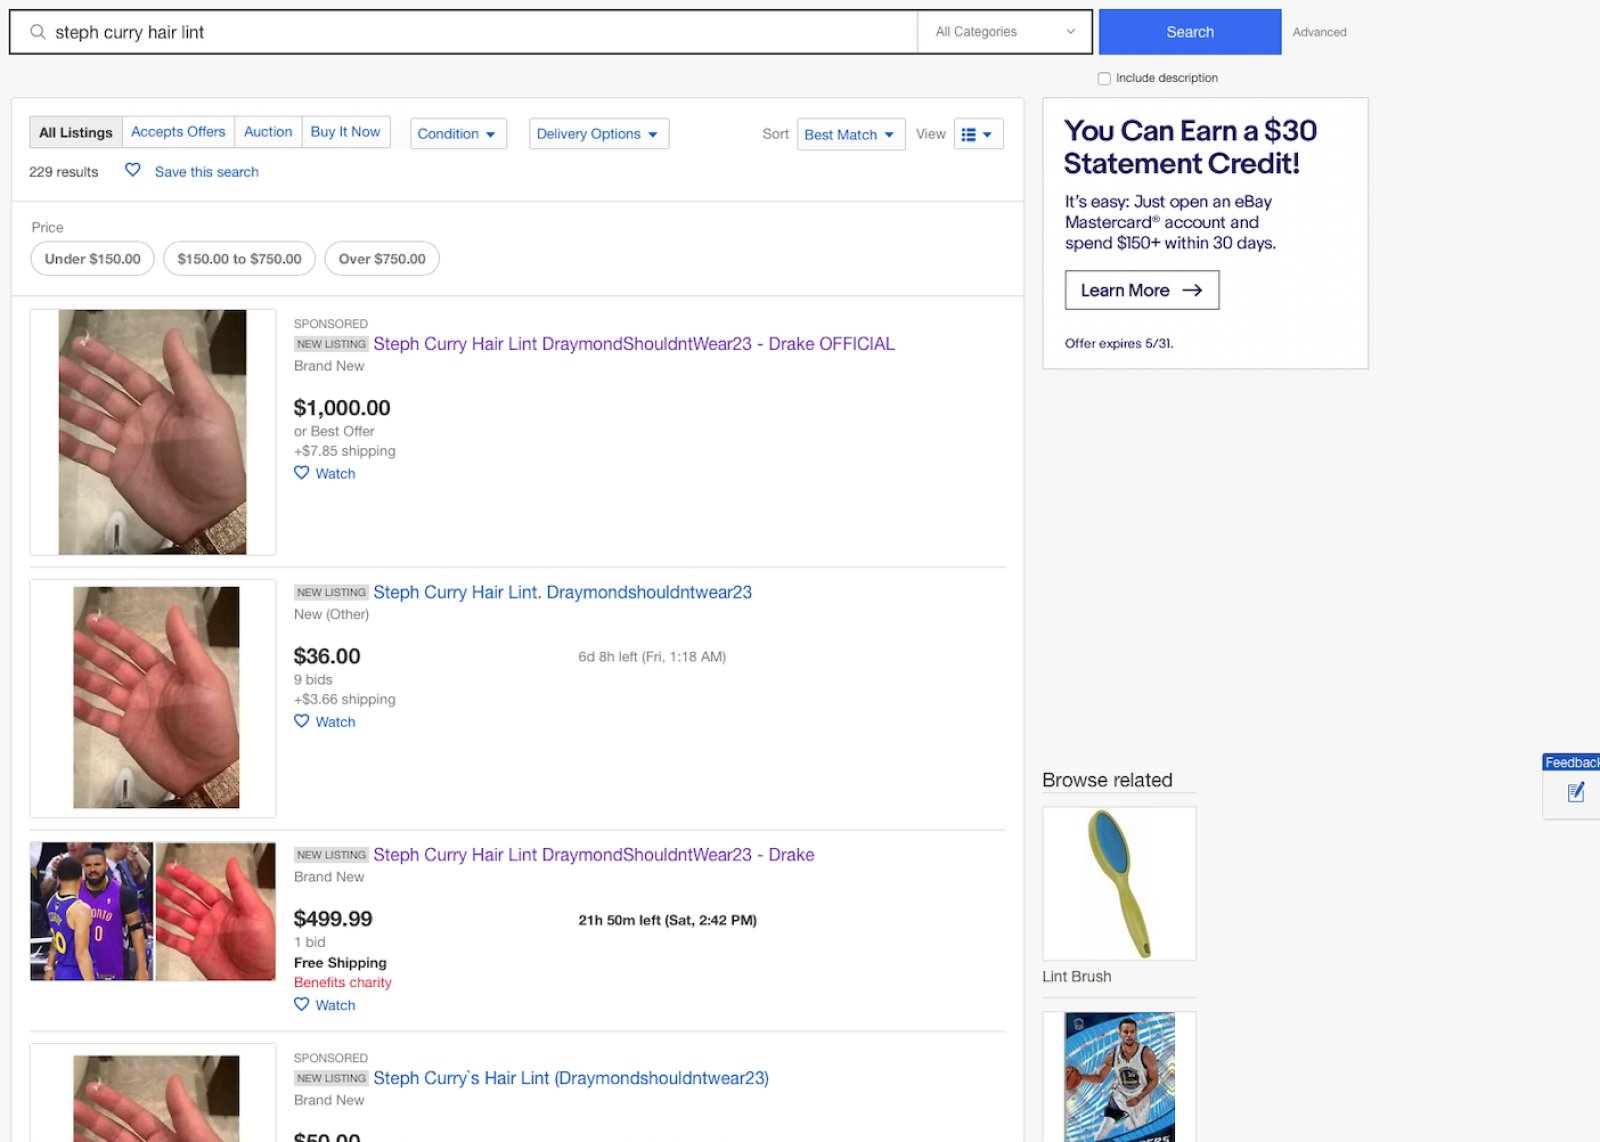 Drake sparks hundreds of fake eBay listings for Steph Curry's hair lint | DeviceDaily.com